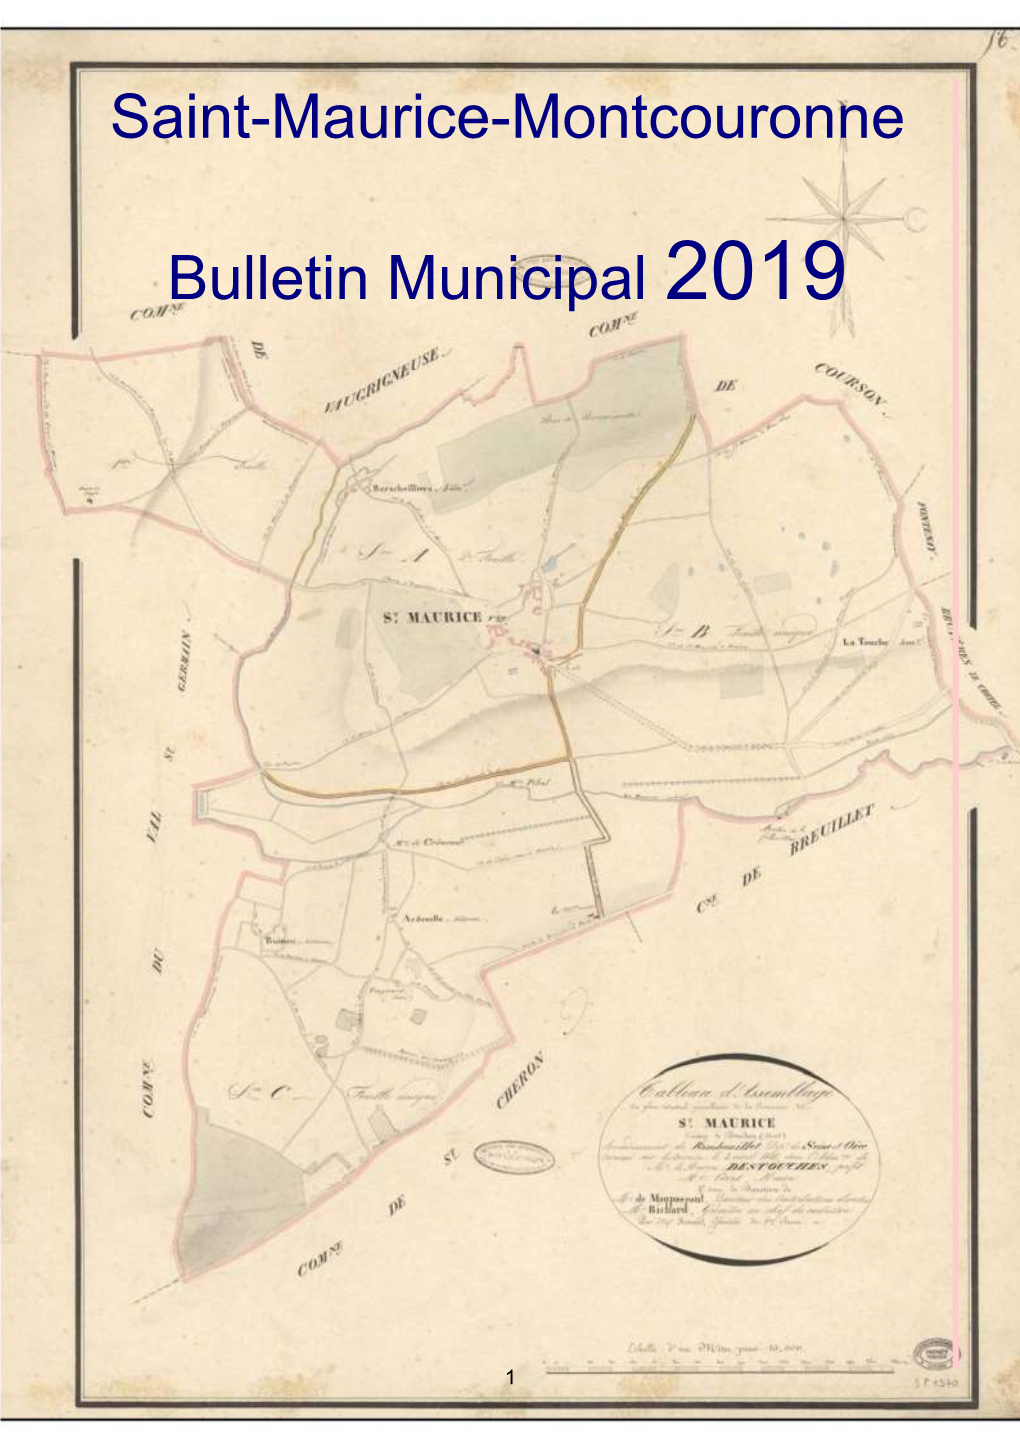 Saint-Maurice-Montcouronne Bulletin Municipal 2019